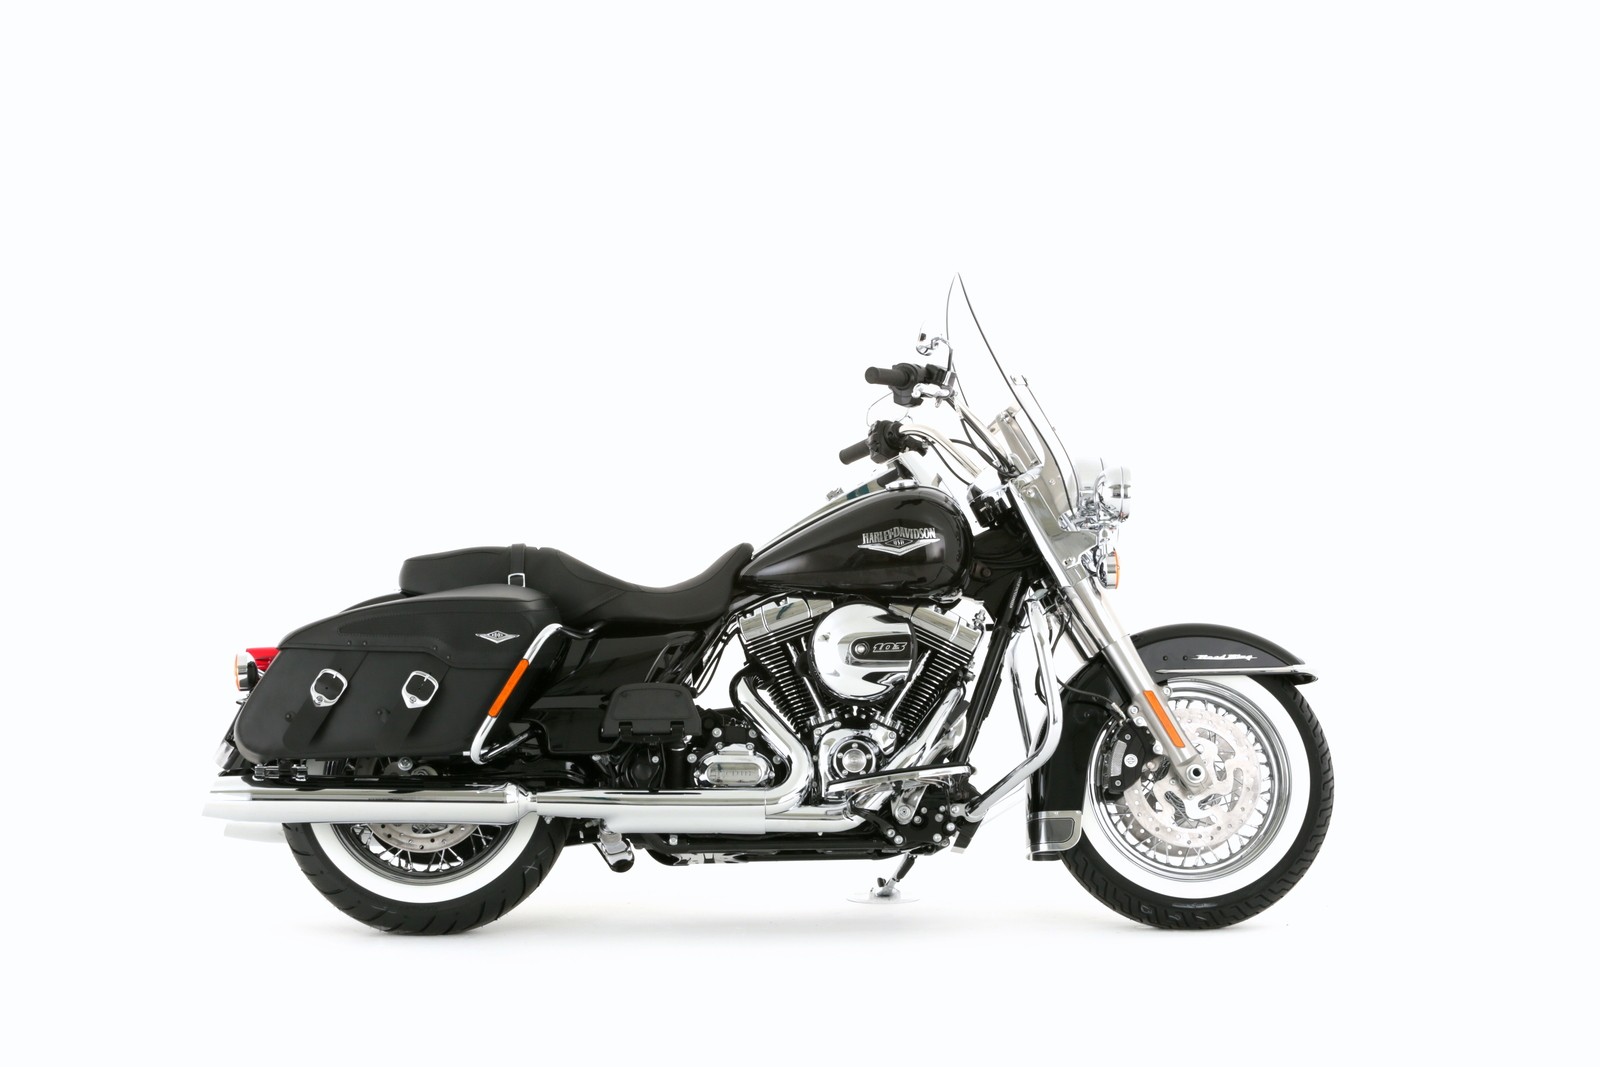 General 1600x1067 Harley-Davidson vehicle black motorcycles motorcycle white background simple background